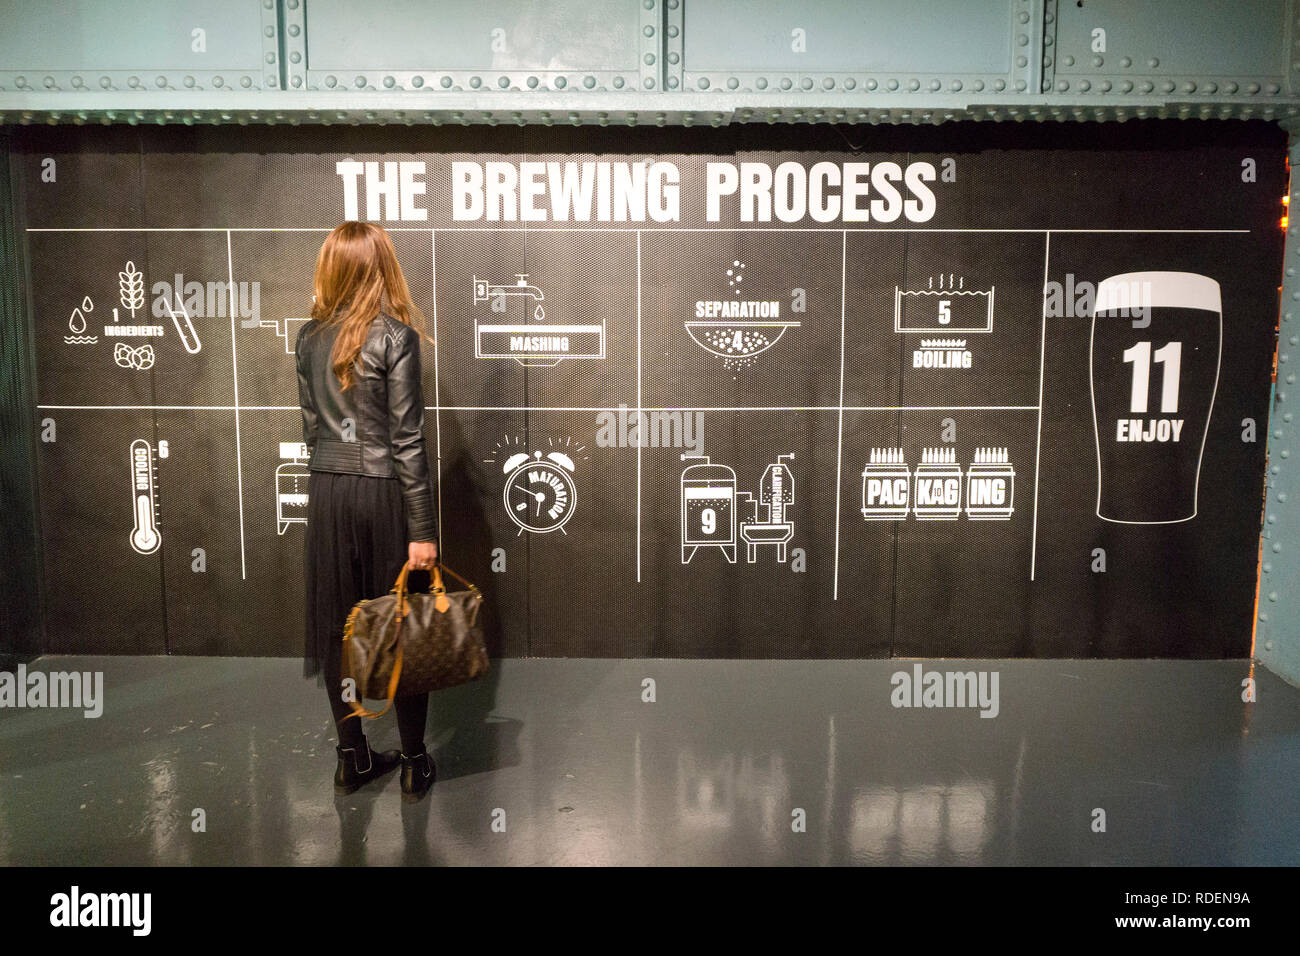 Besucher Blick auf Displays im Guinness Storehouse Brauerei in Dublin, Irland, 15. Jan 2019. Stockfoto